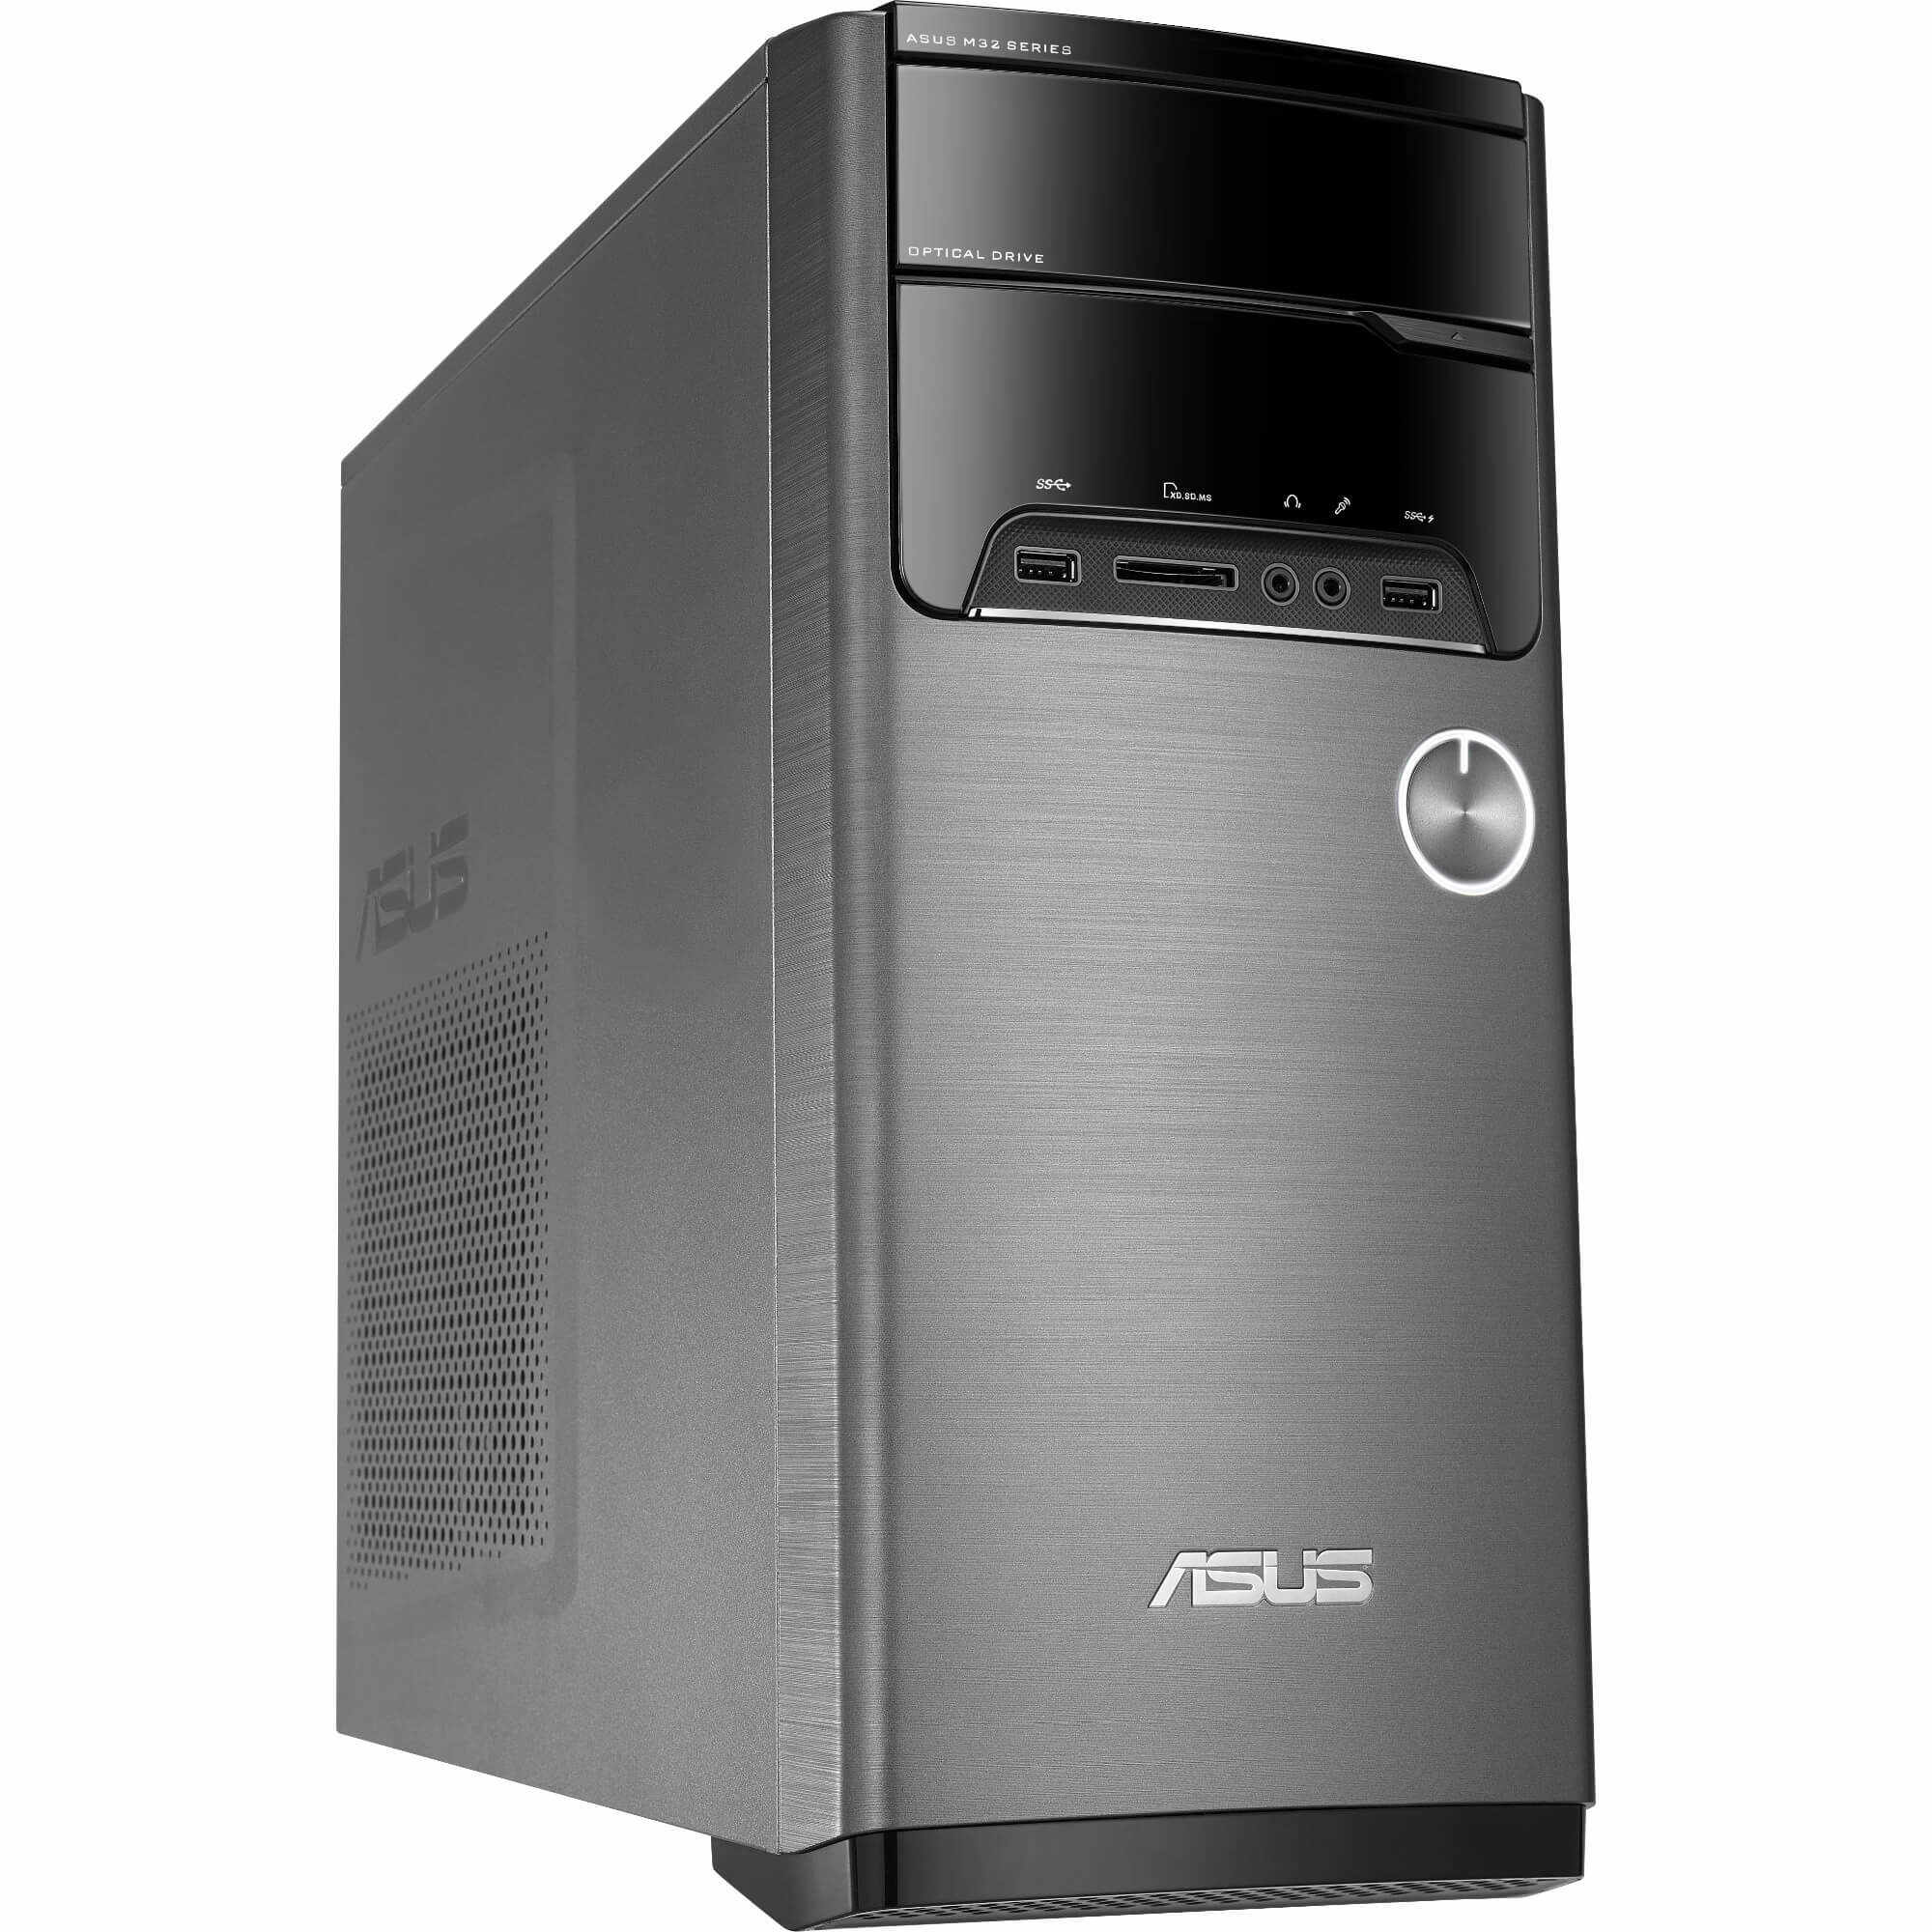 Sistem Desktop PC Asus M32BF-RO010D, AMD A-Series, 8GB DDR3, HDD 1TB, AMD Radeon R9 255 2GB, Free DOS